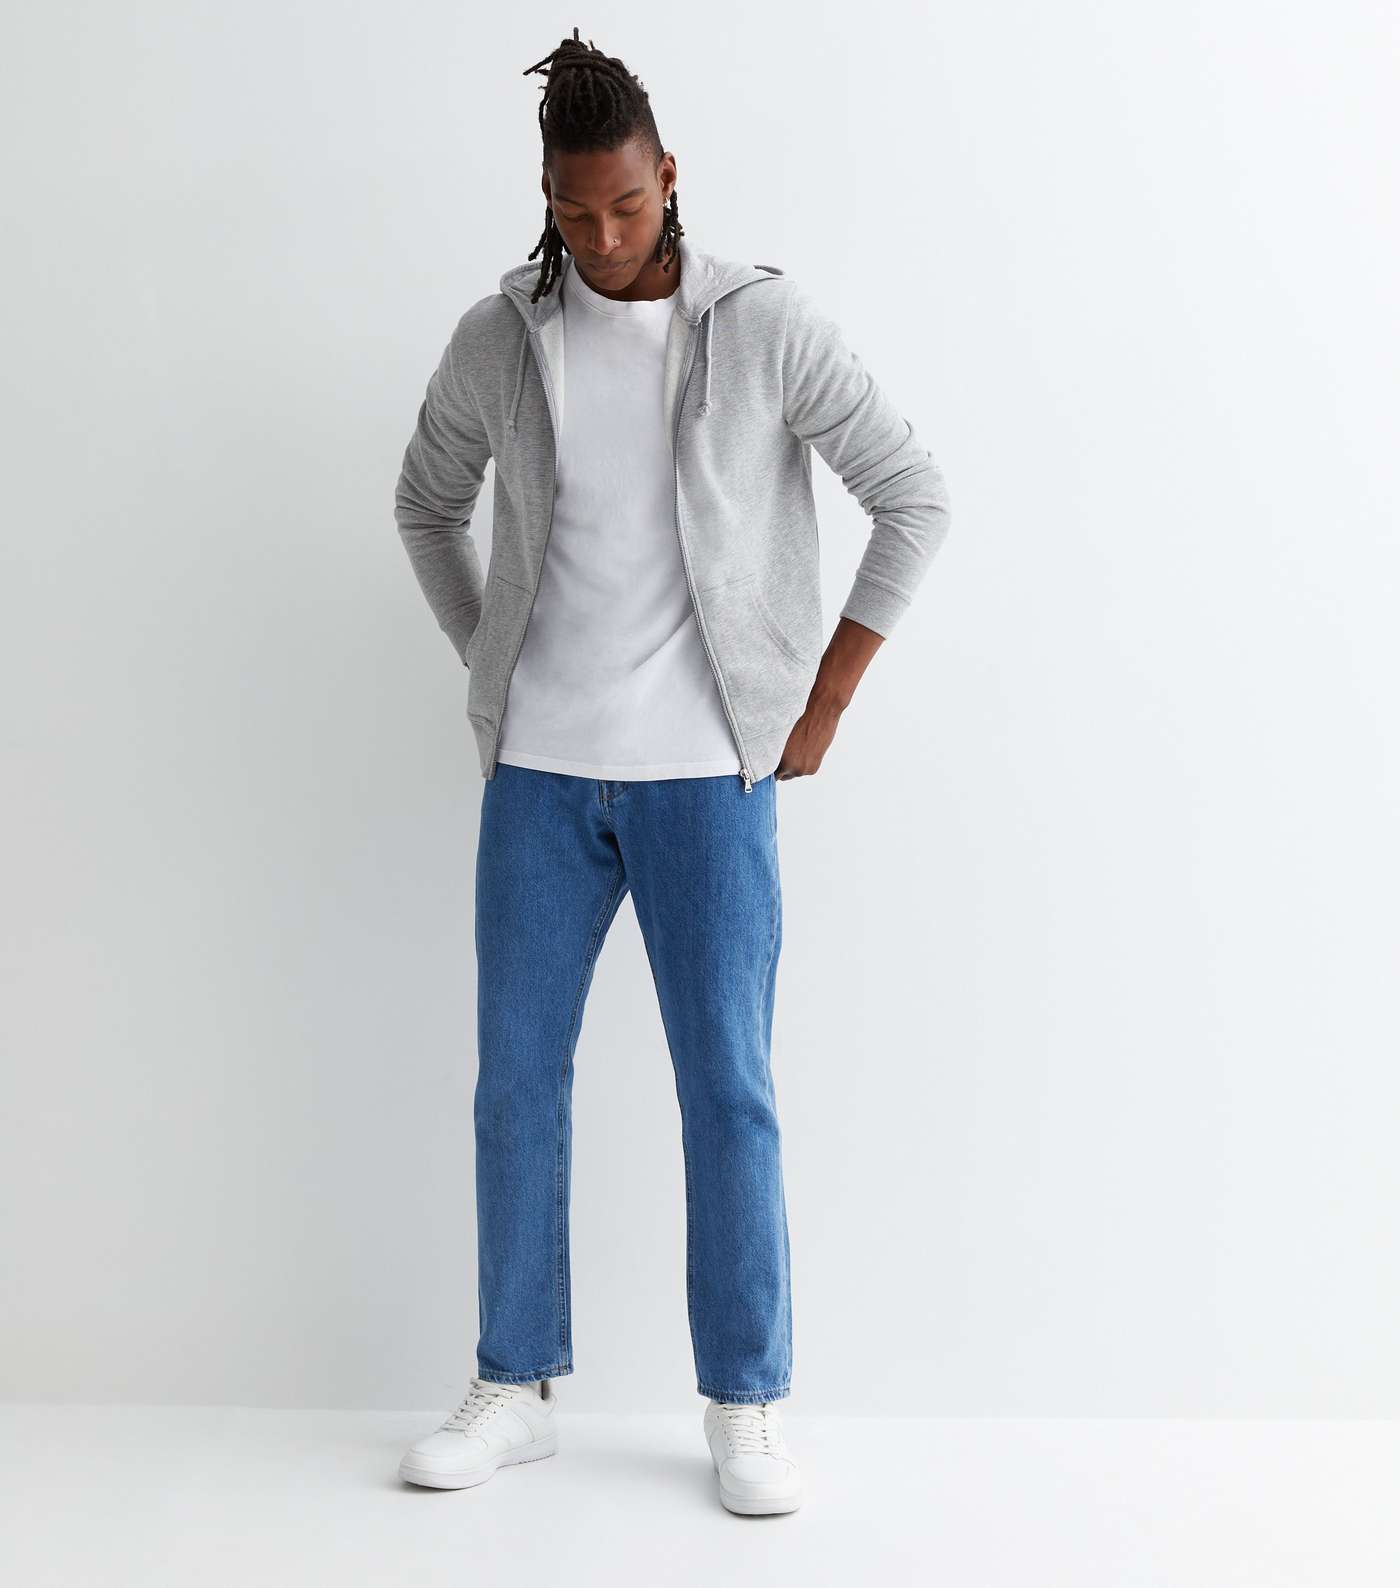 https://media2.newlookassets.com/i/newlook/870554507M2/mens/clothing/hoodies-sweatshirts/grey-marl-zip-up-regular-fit-hoodie.jpg?strip=true&w=1400&qlt=60&fmt=jpeg